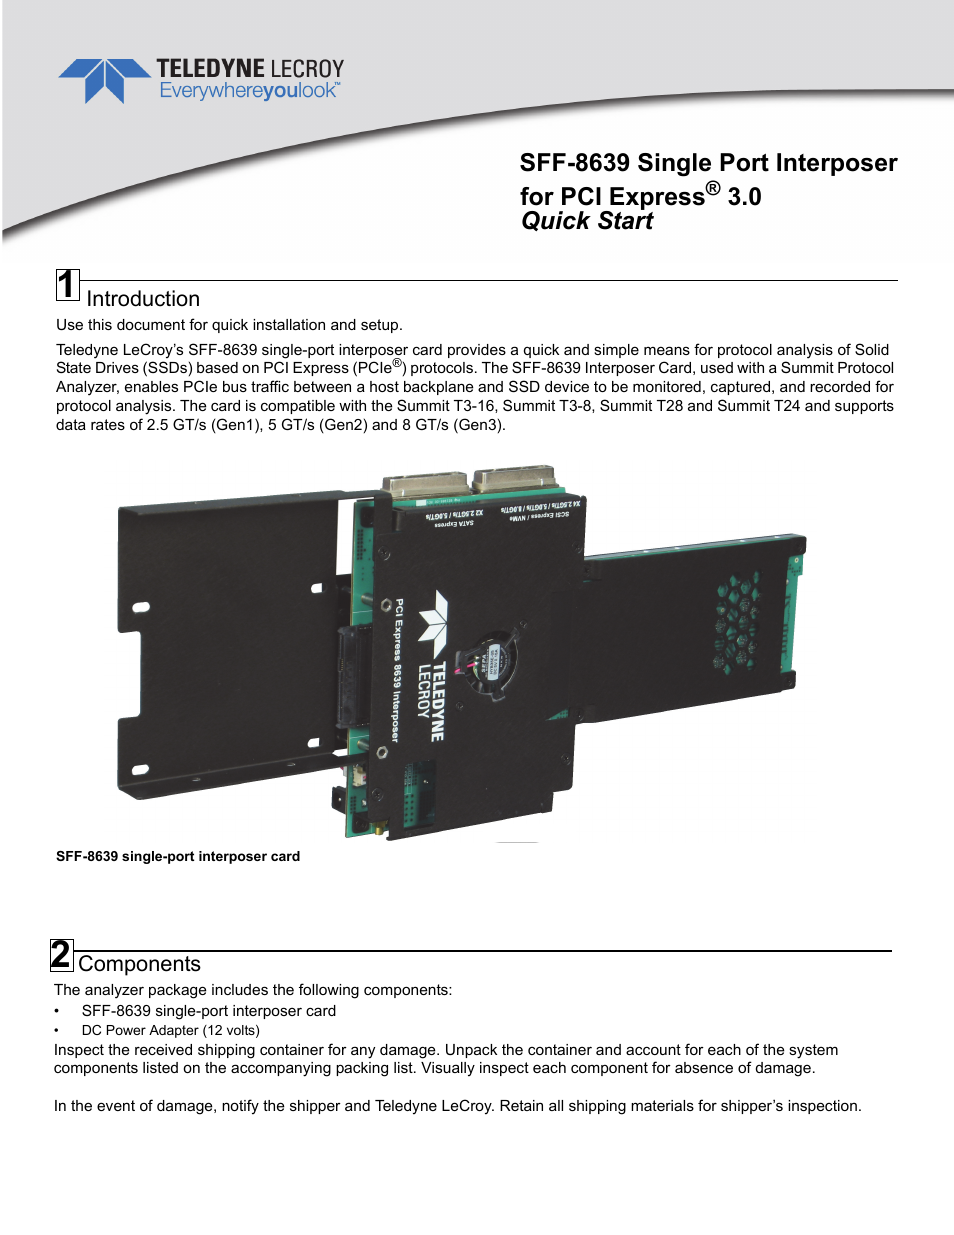 SFF-8639 Single Port Interposer QSG